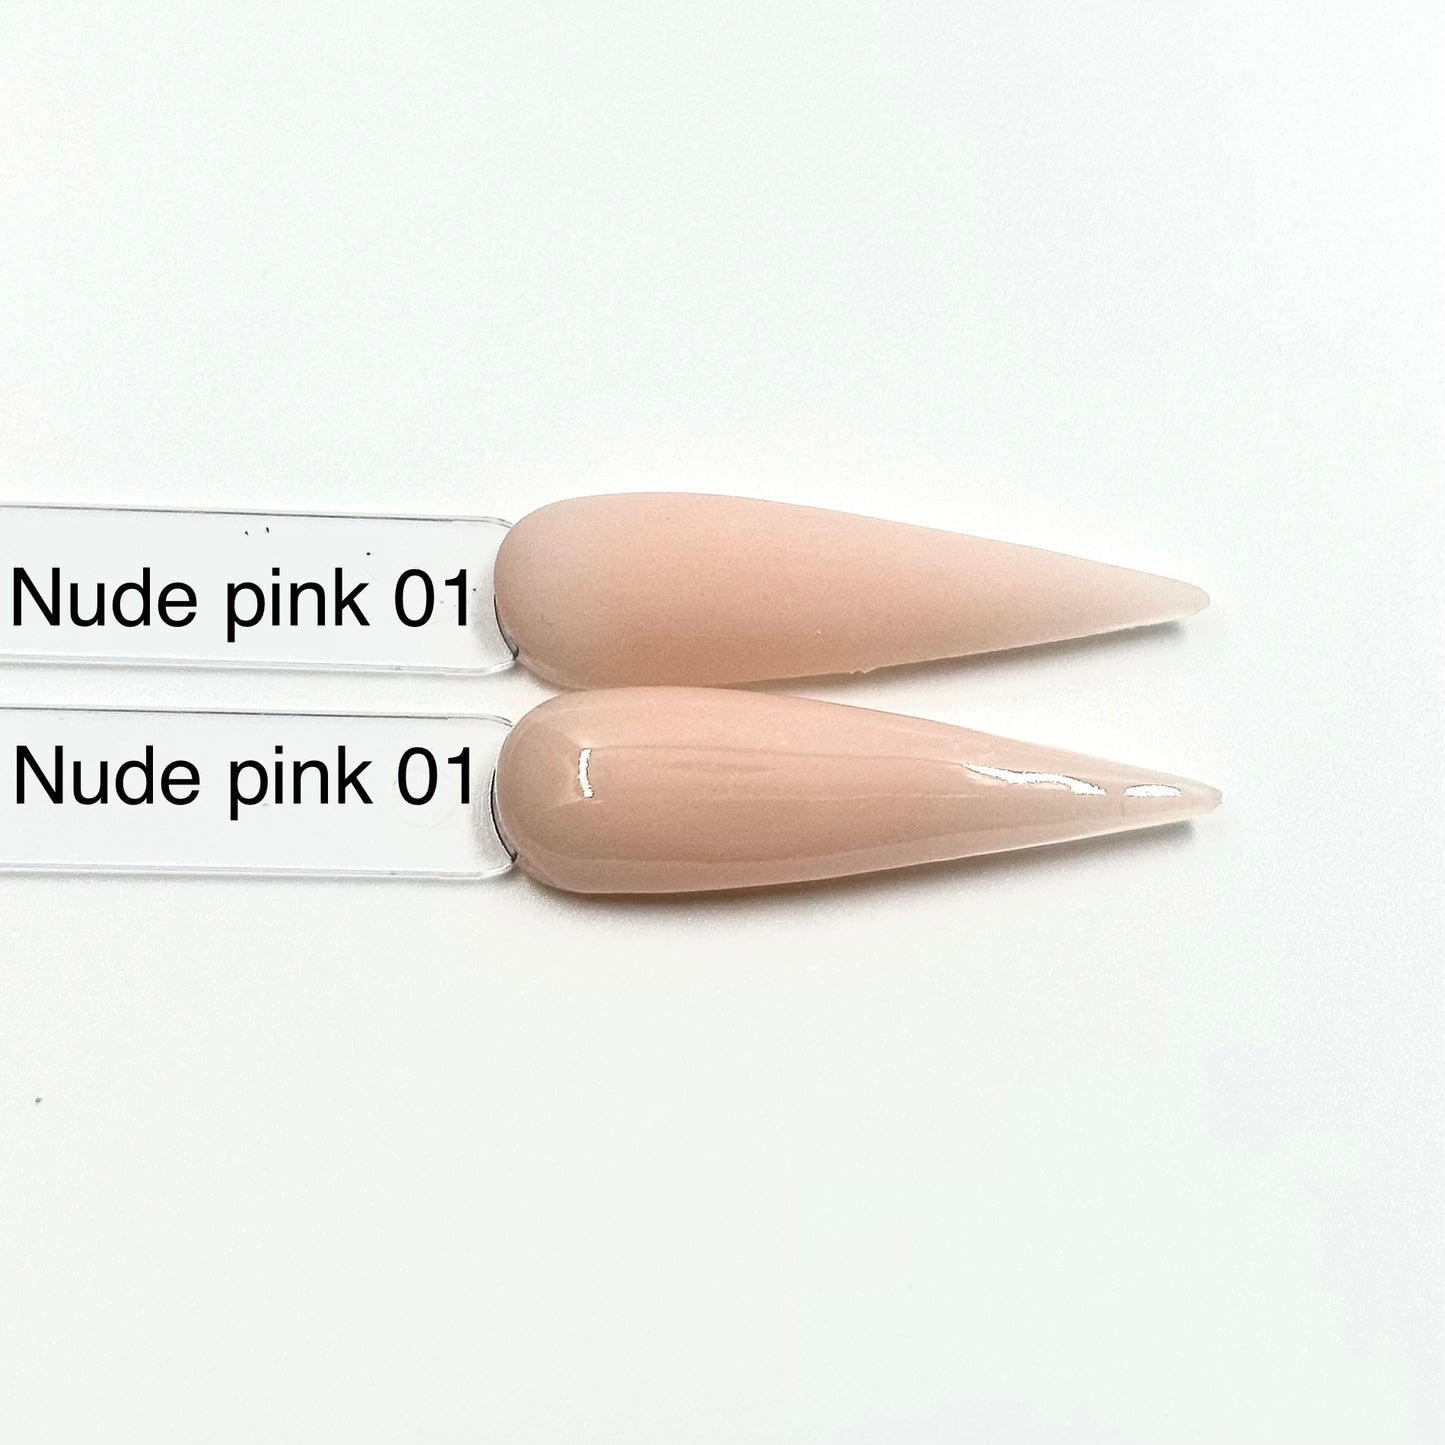 Nude Pink Acrylic & Dip Powder (20 oz)